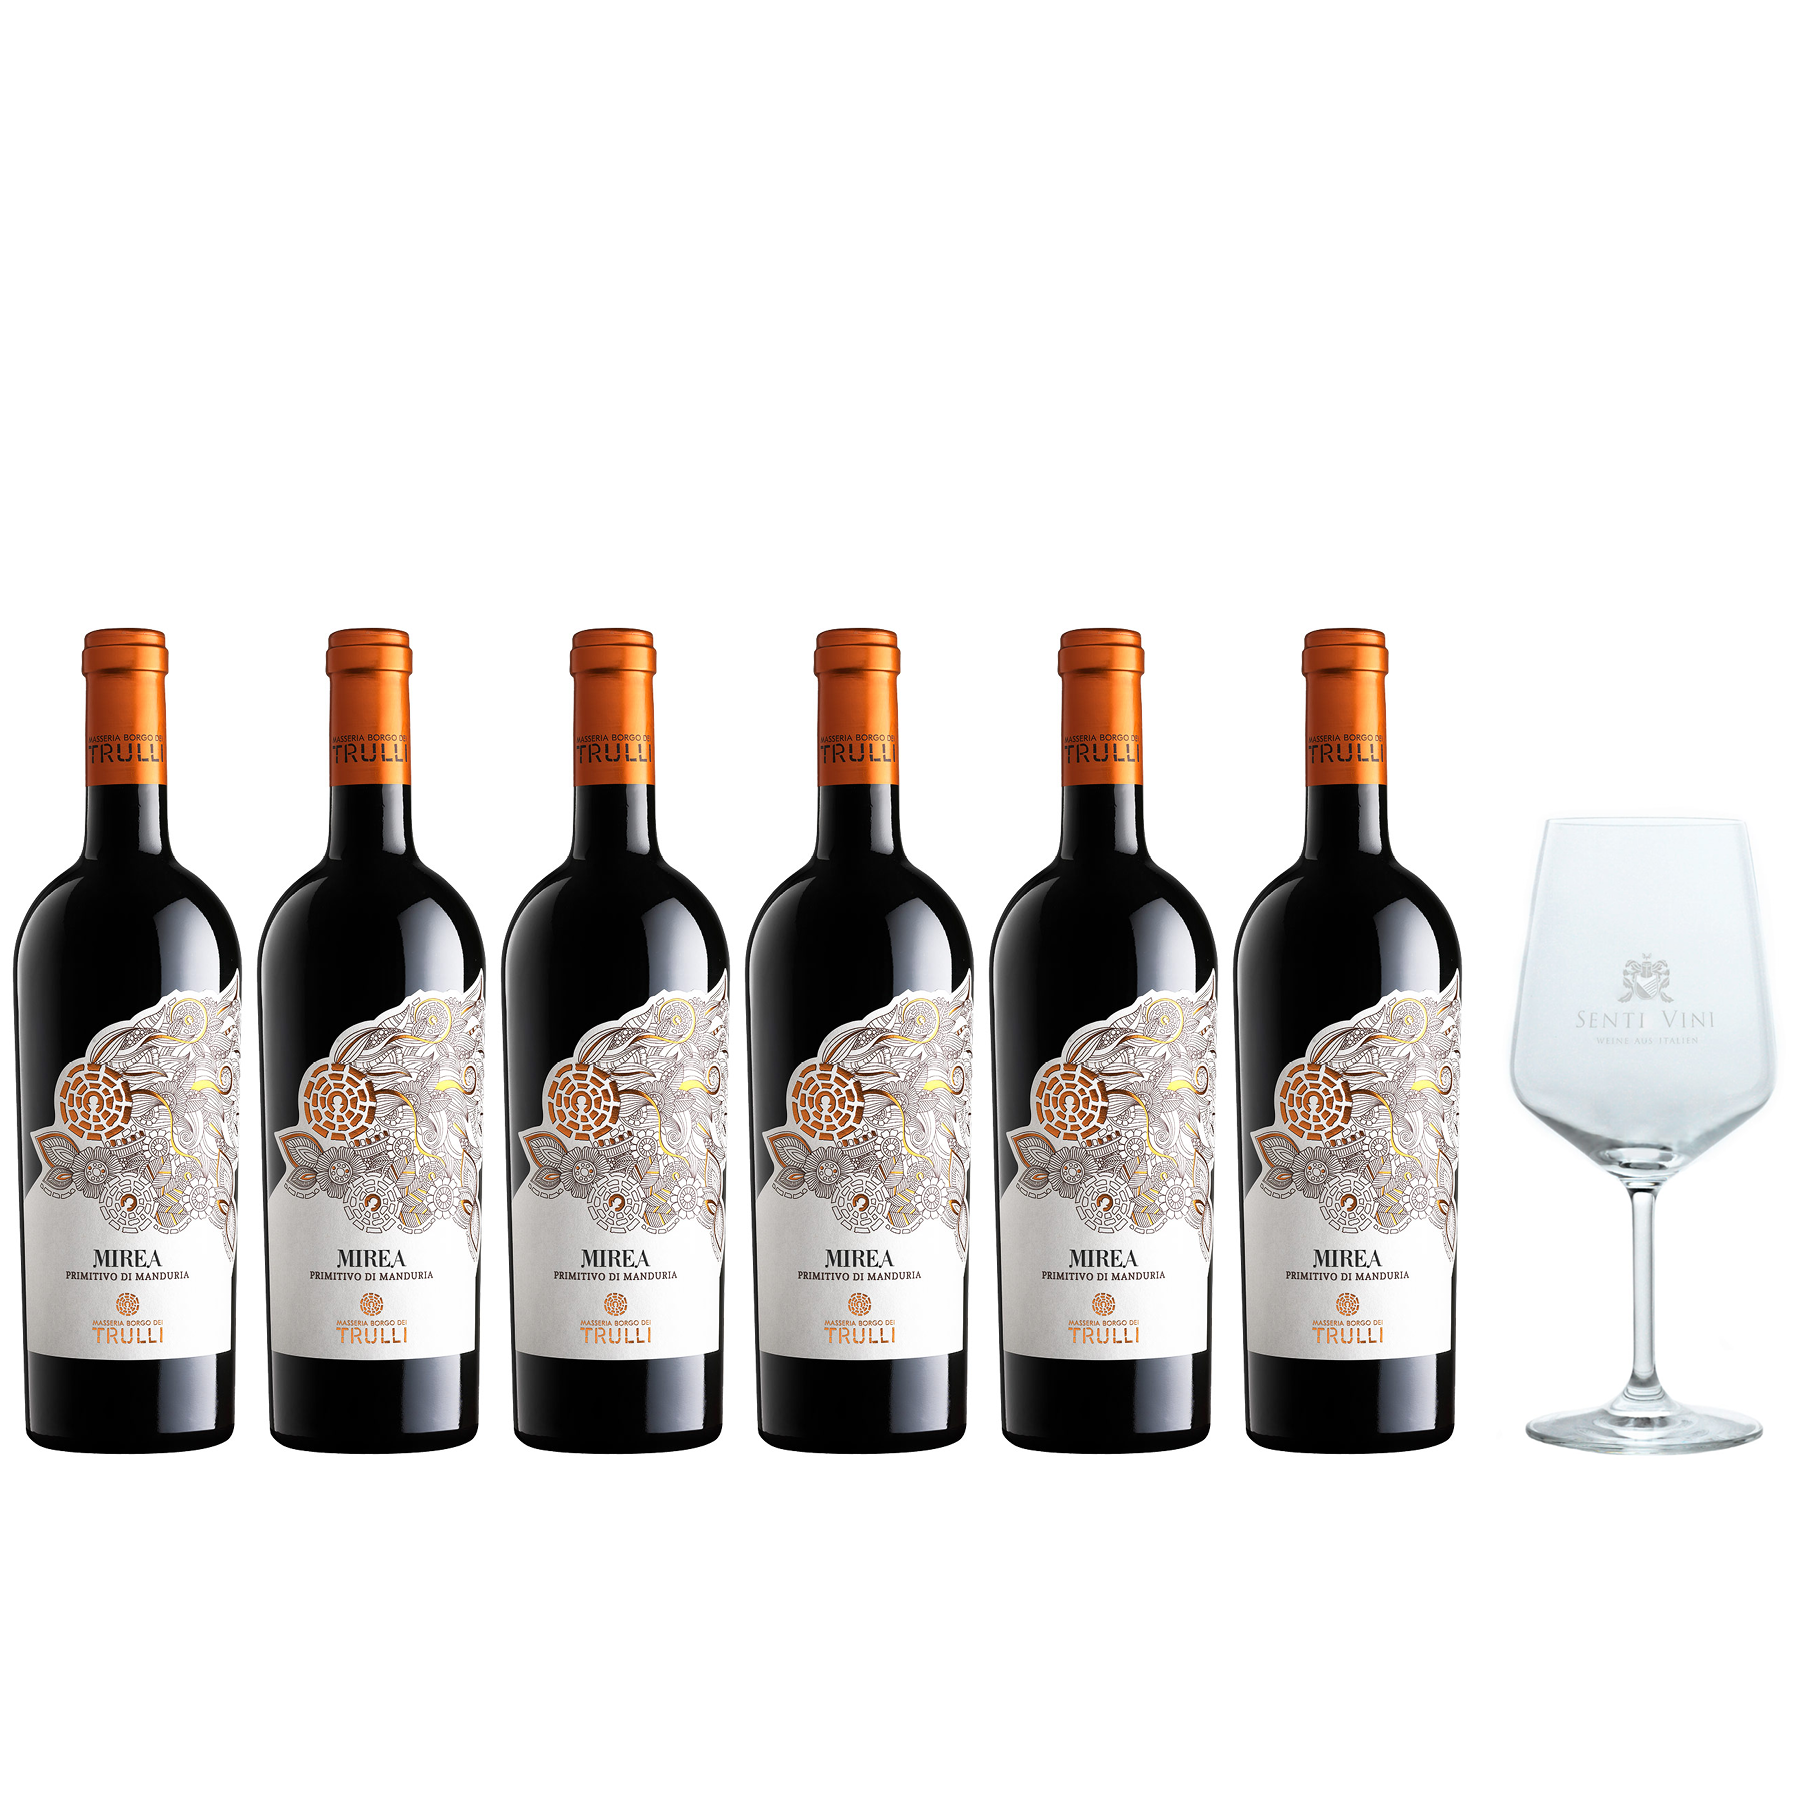 Sparpaket Masseria Borgo dei Trulli Mirea Primitivo di Manduria DOP 2021 (6  x 0,75l) mit Spiegelau Senti Vini Weinglas | Online kaufen bei Senti Vini -  Weine aus Italien